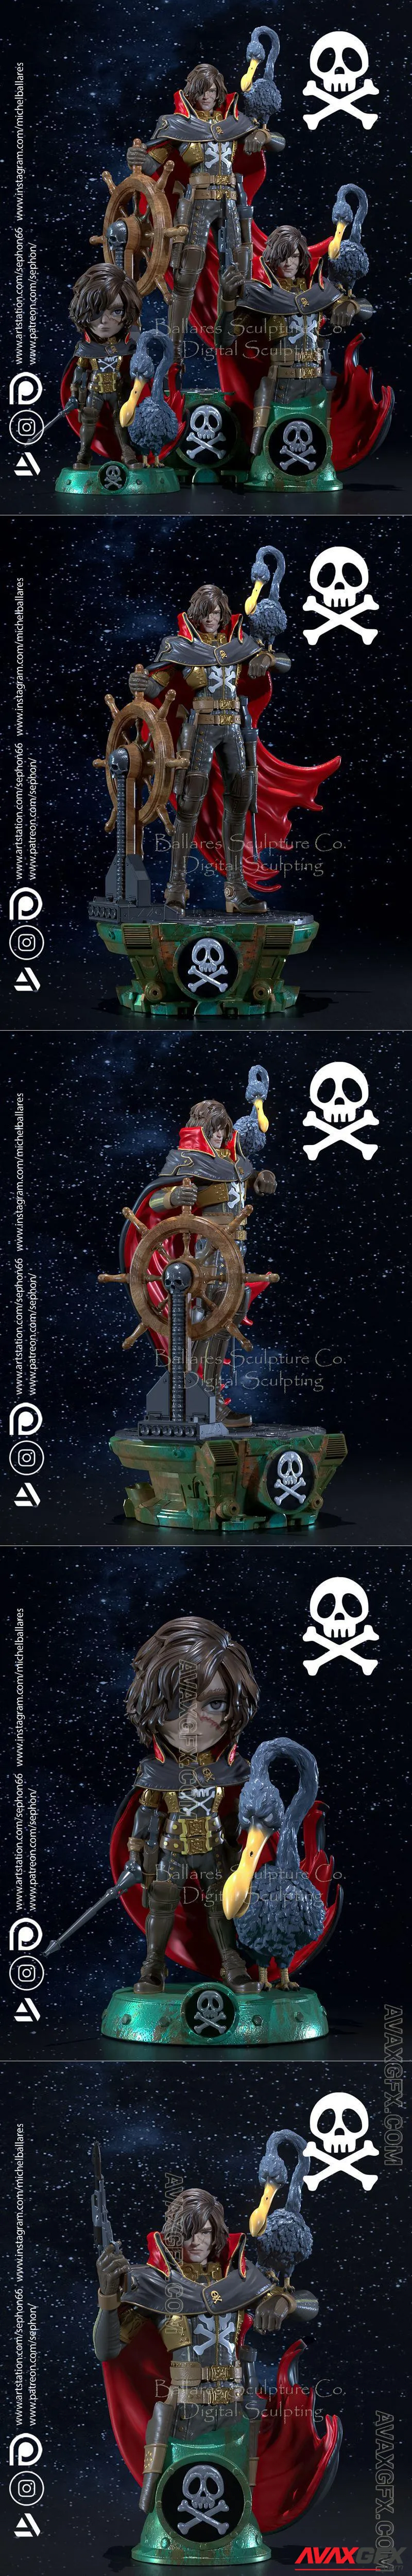 Captain Harlock By Creative Geek MB - STL 3D Model